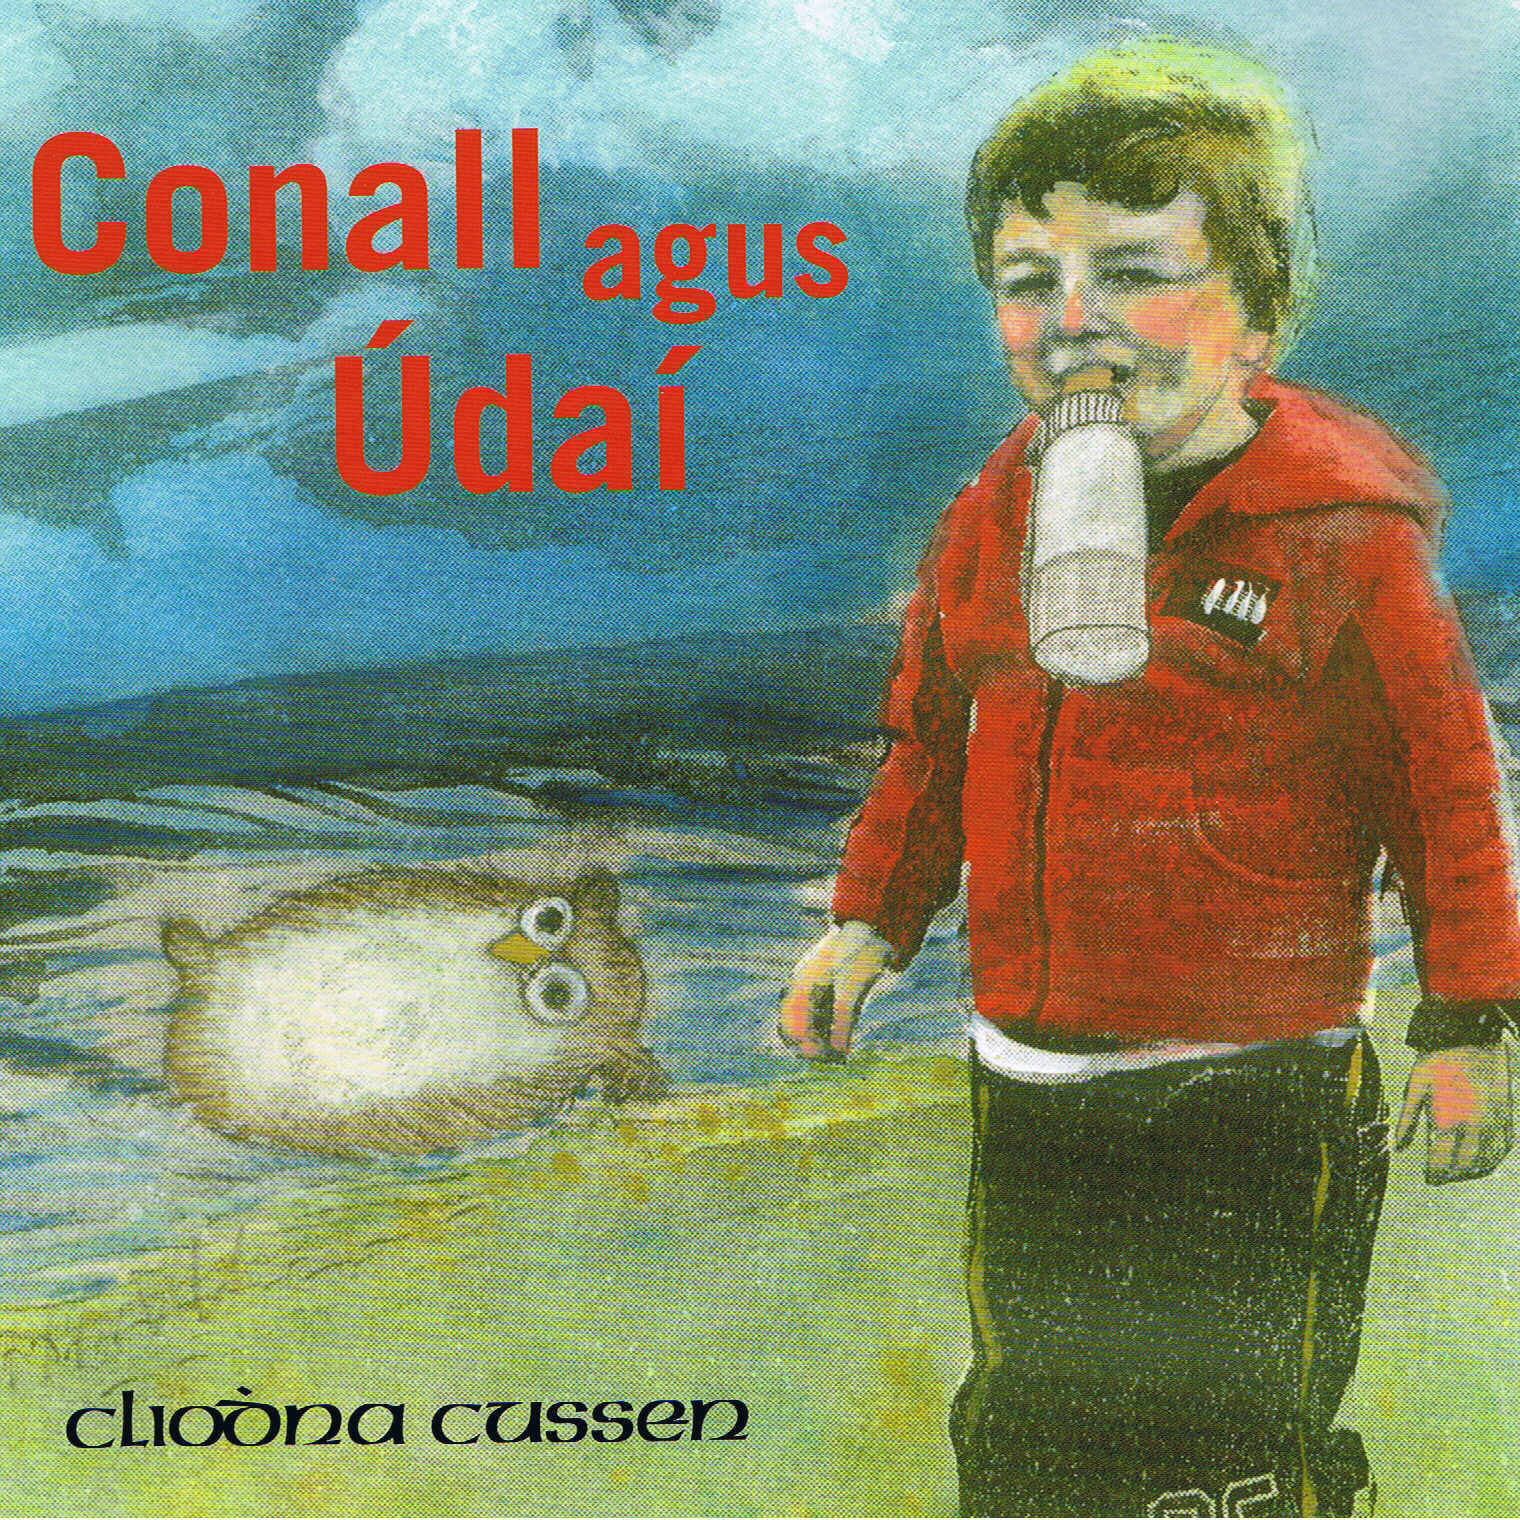 Cliodhna Cussen 2005 Paisti Children's Books